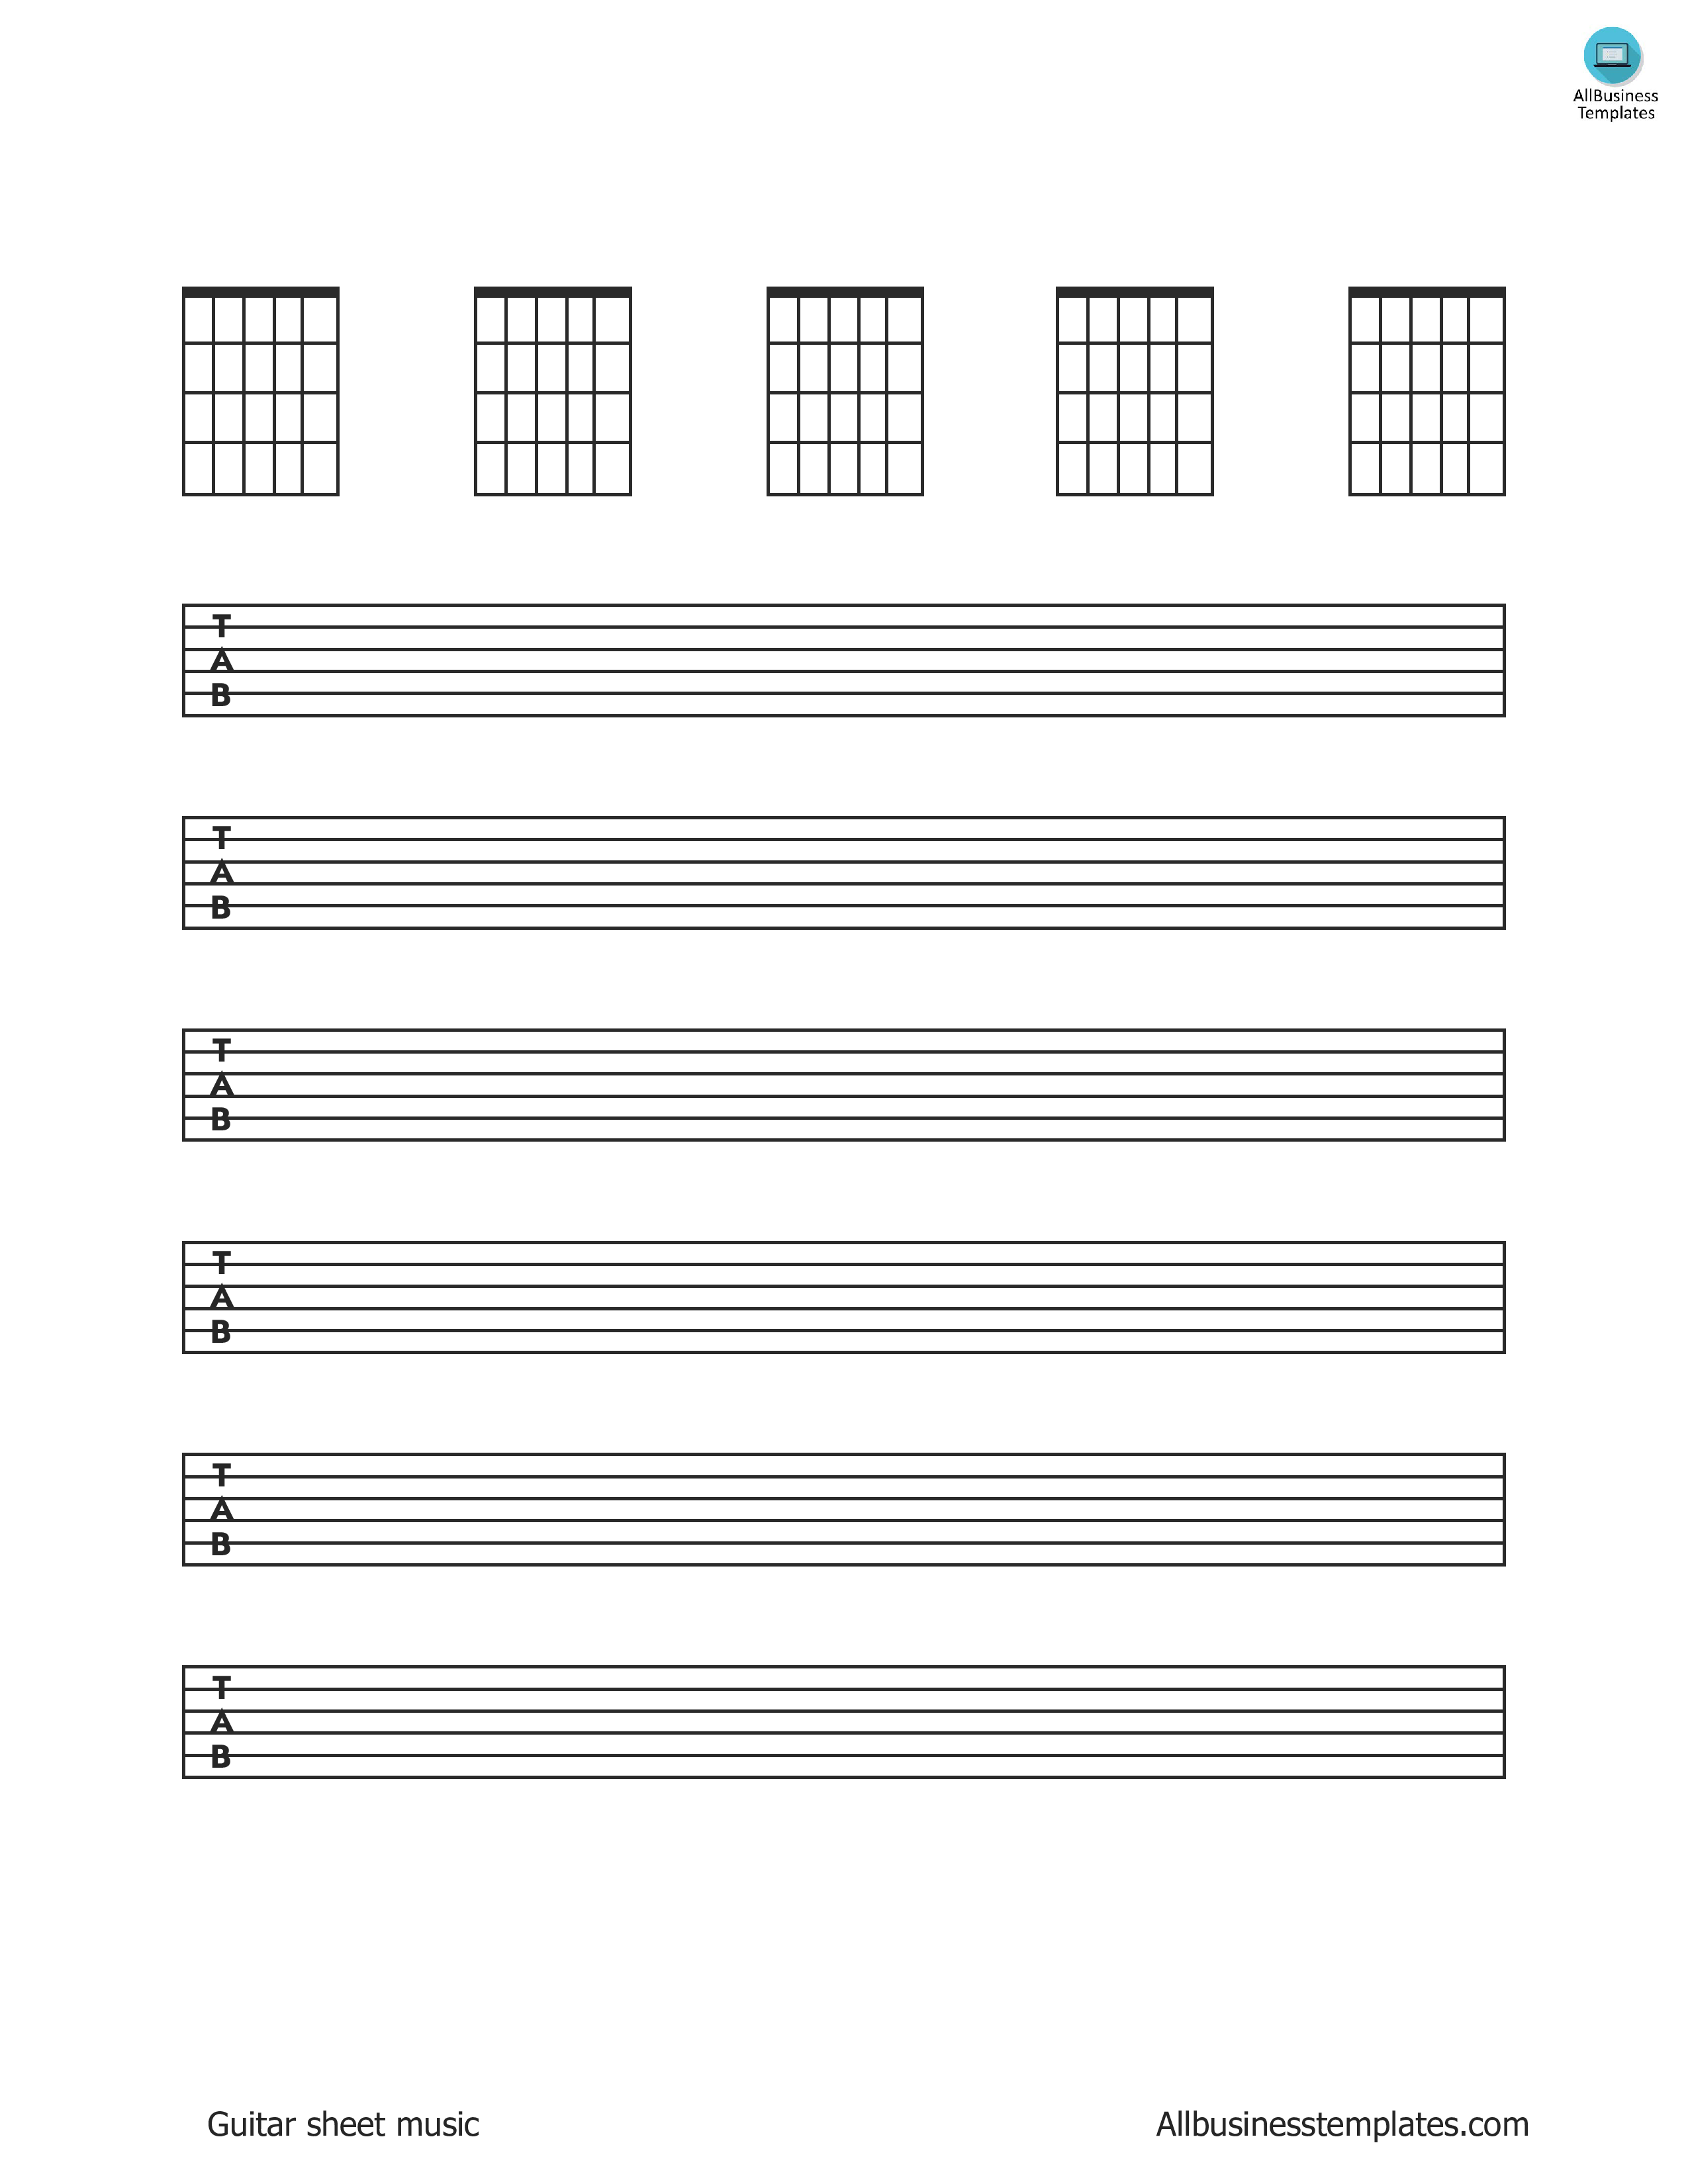 Guitar Sheet Music sheets 模板